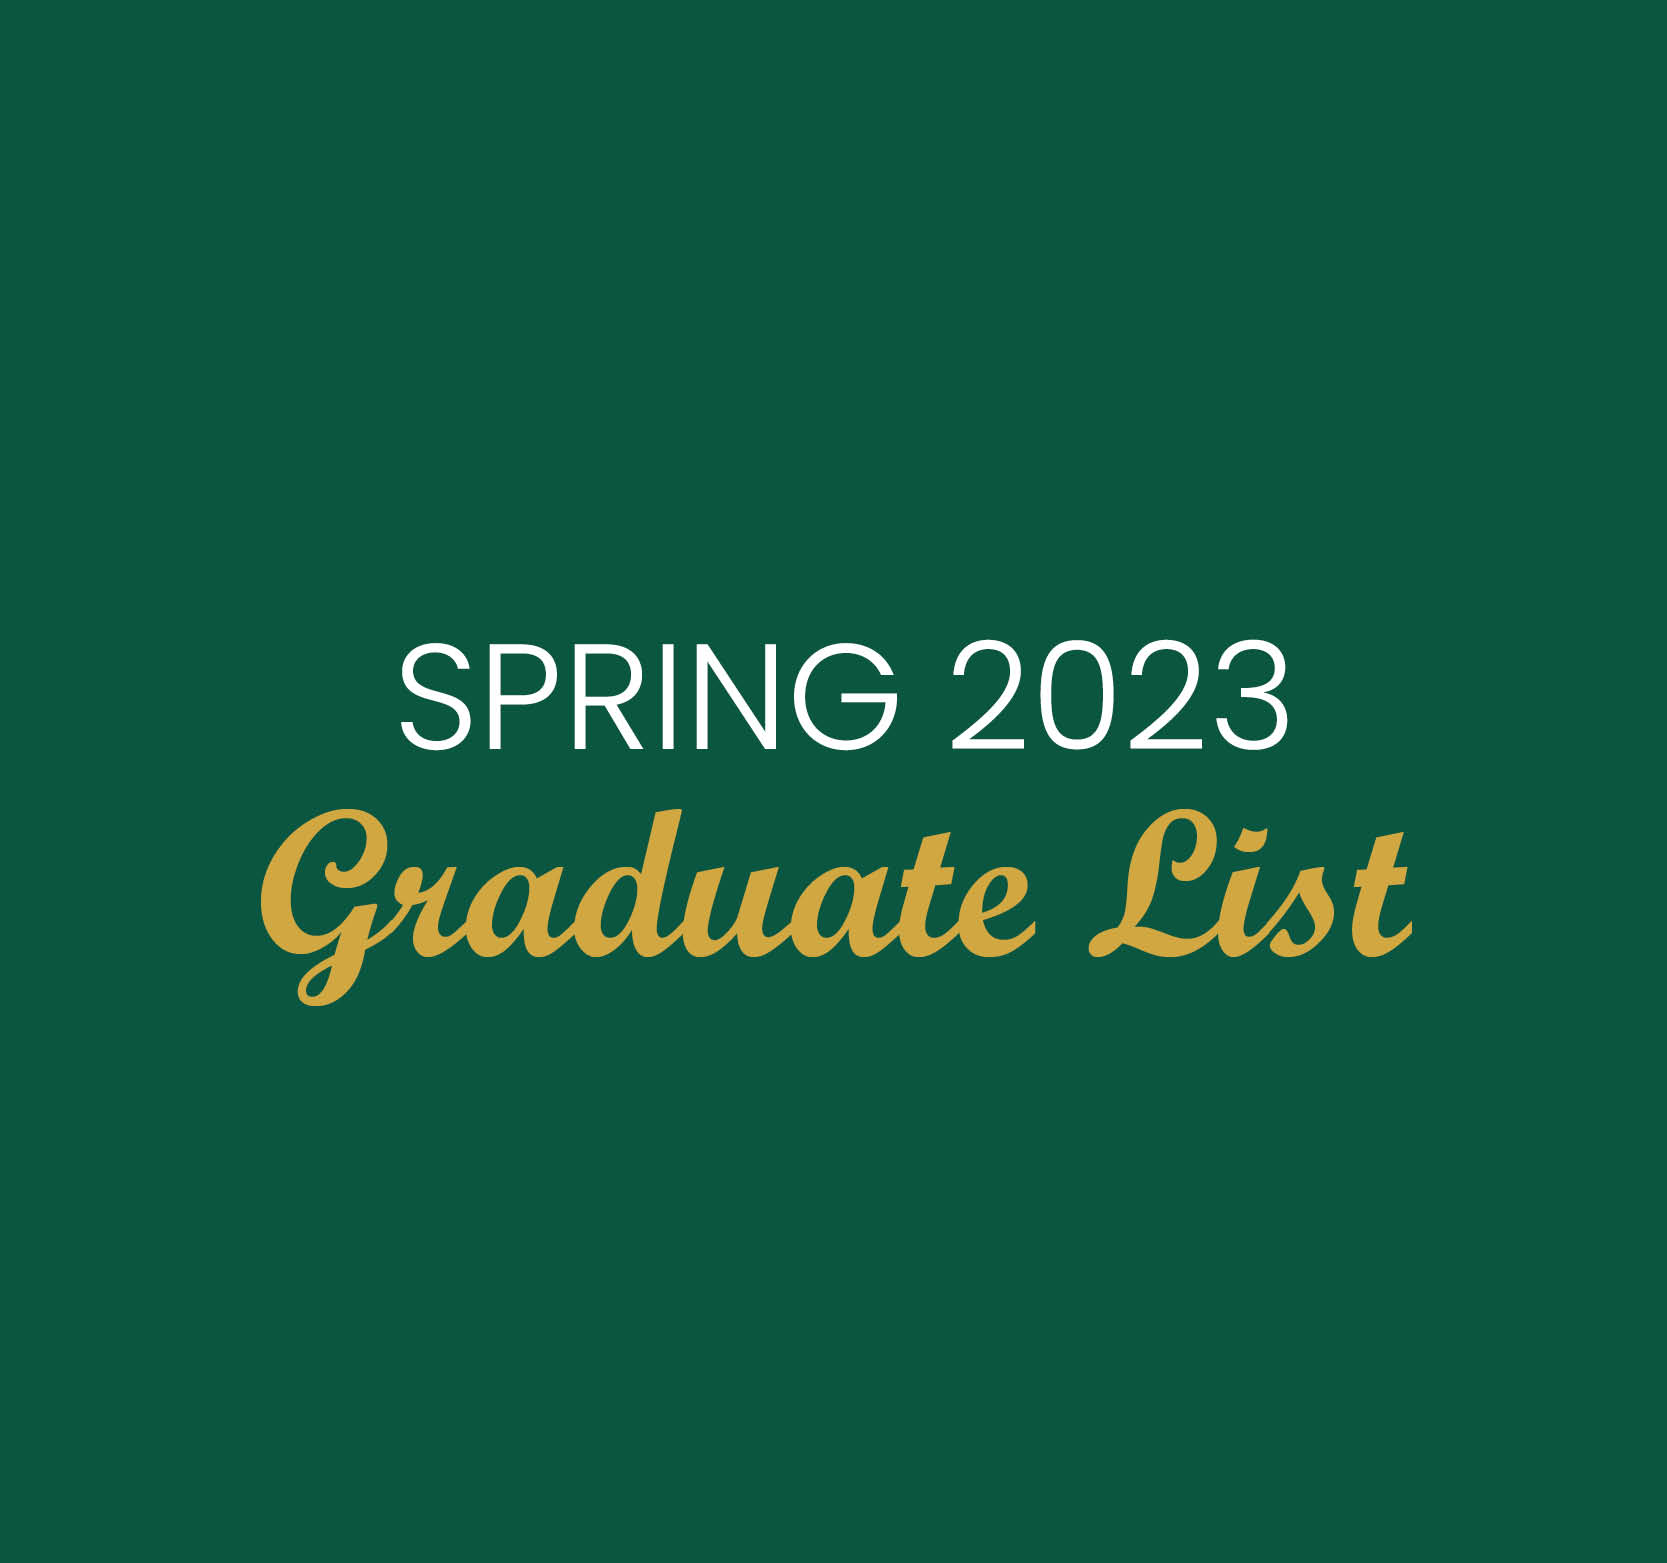 Image for Spring 2023 Graduate List